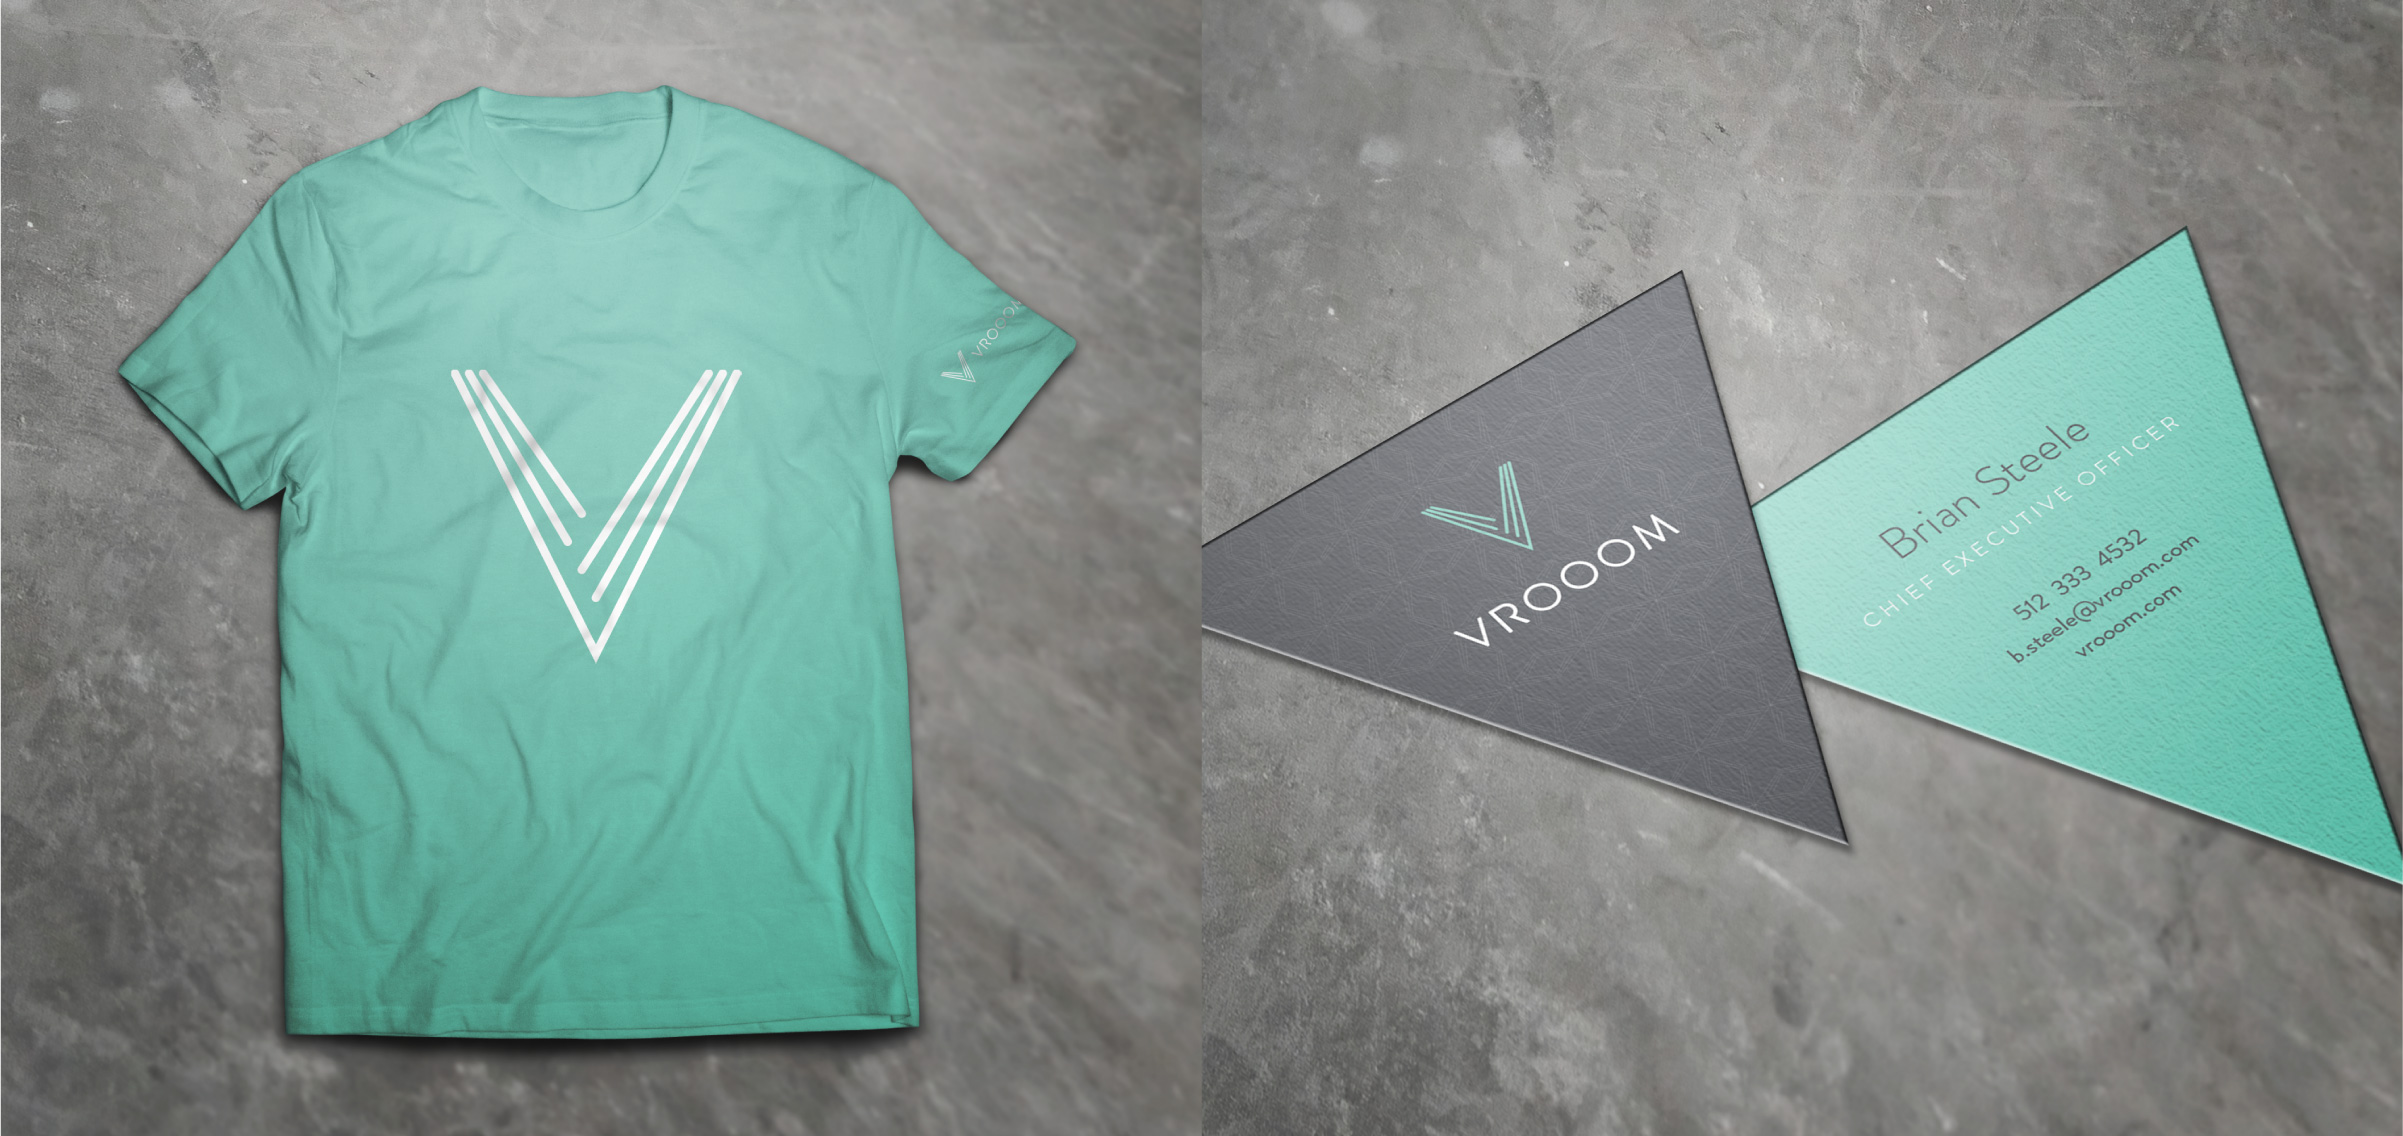 VROOOM Brand Identity T-Shirt and V-Shaped Business Card Mockup